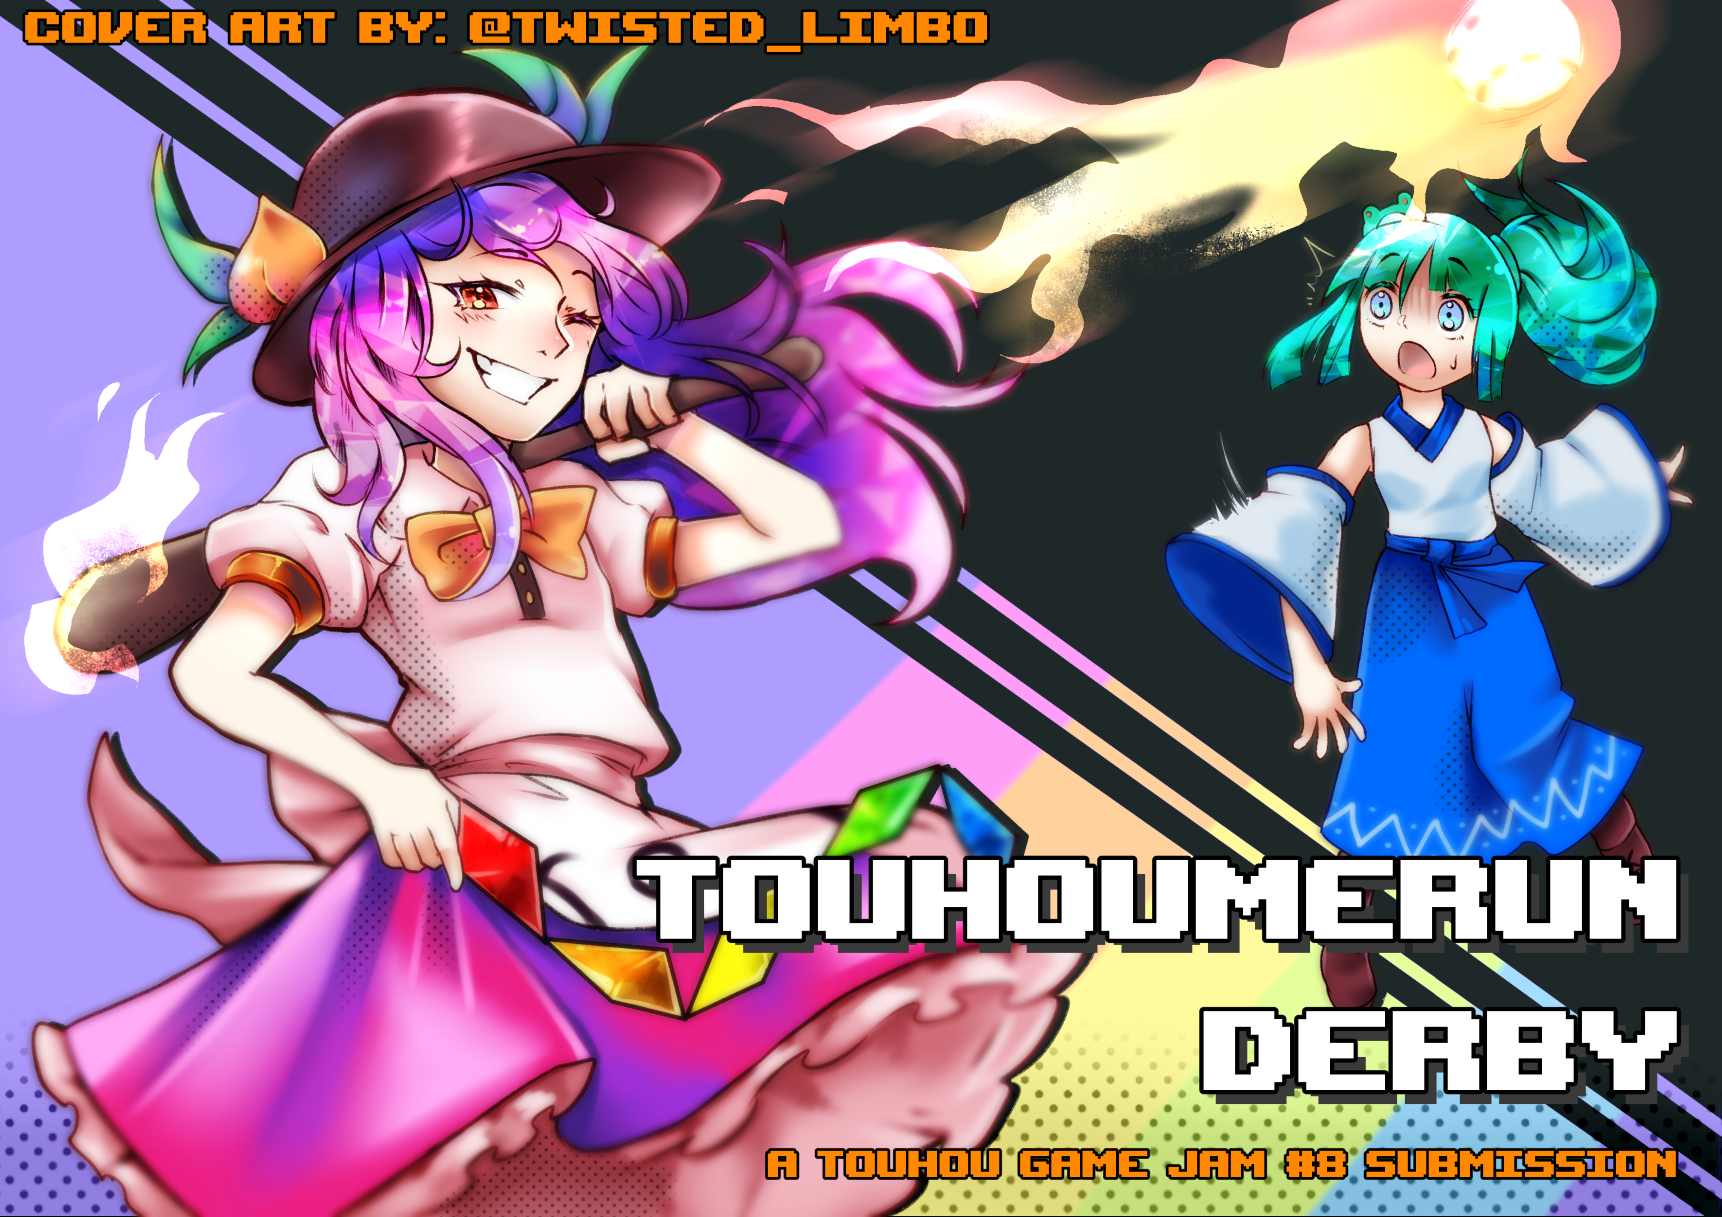 Touhoumerun Derby: Tenshi's Danmaku Dreamteam